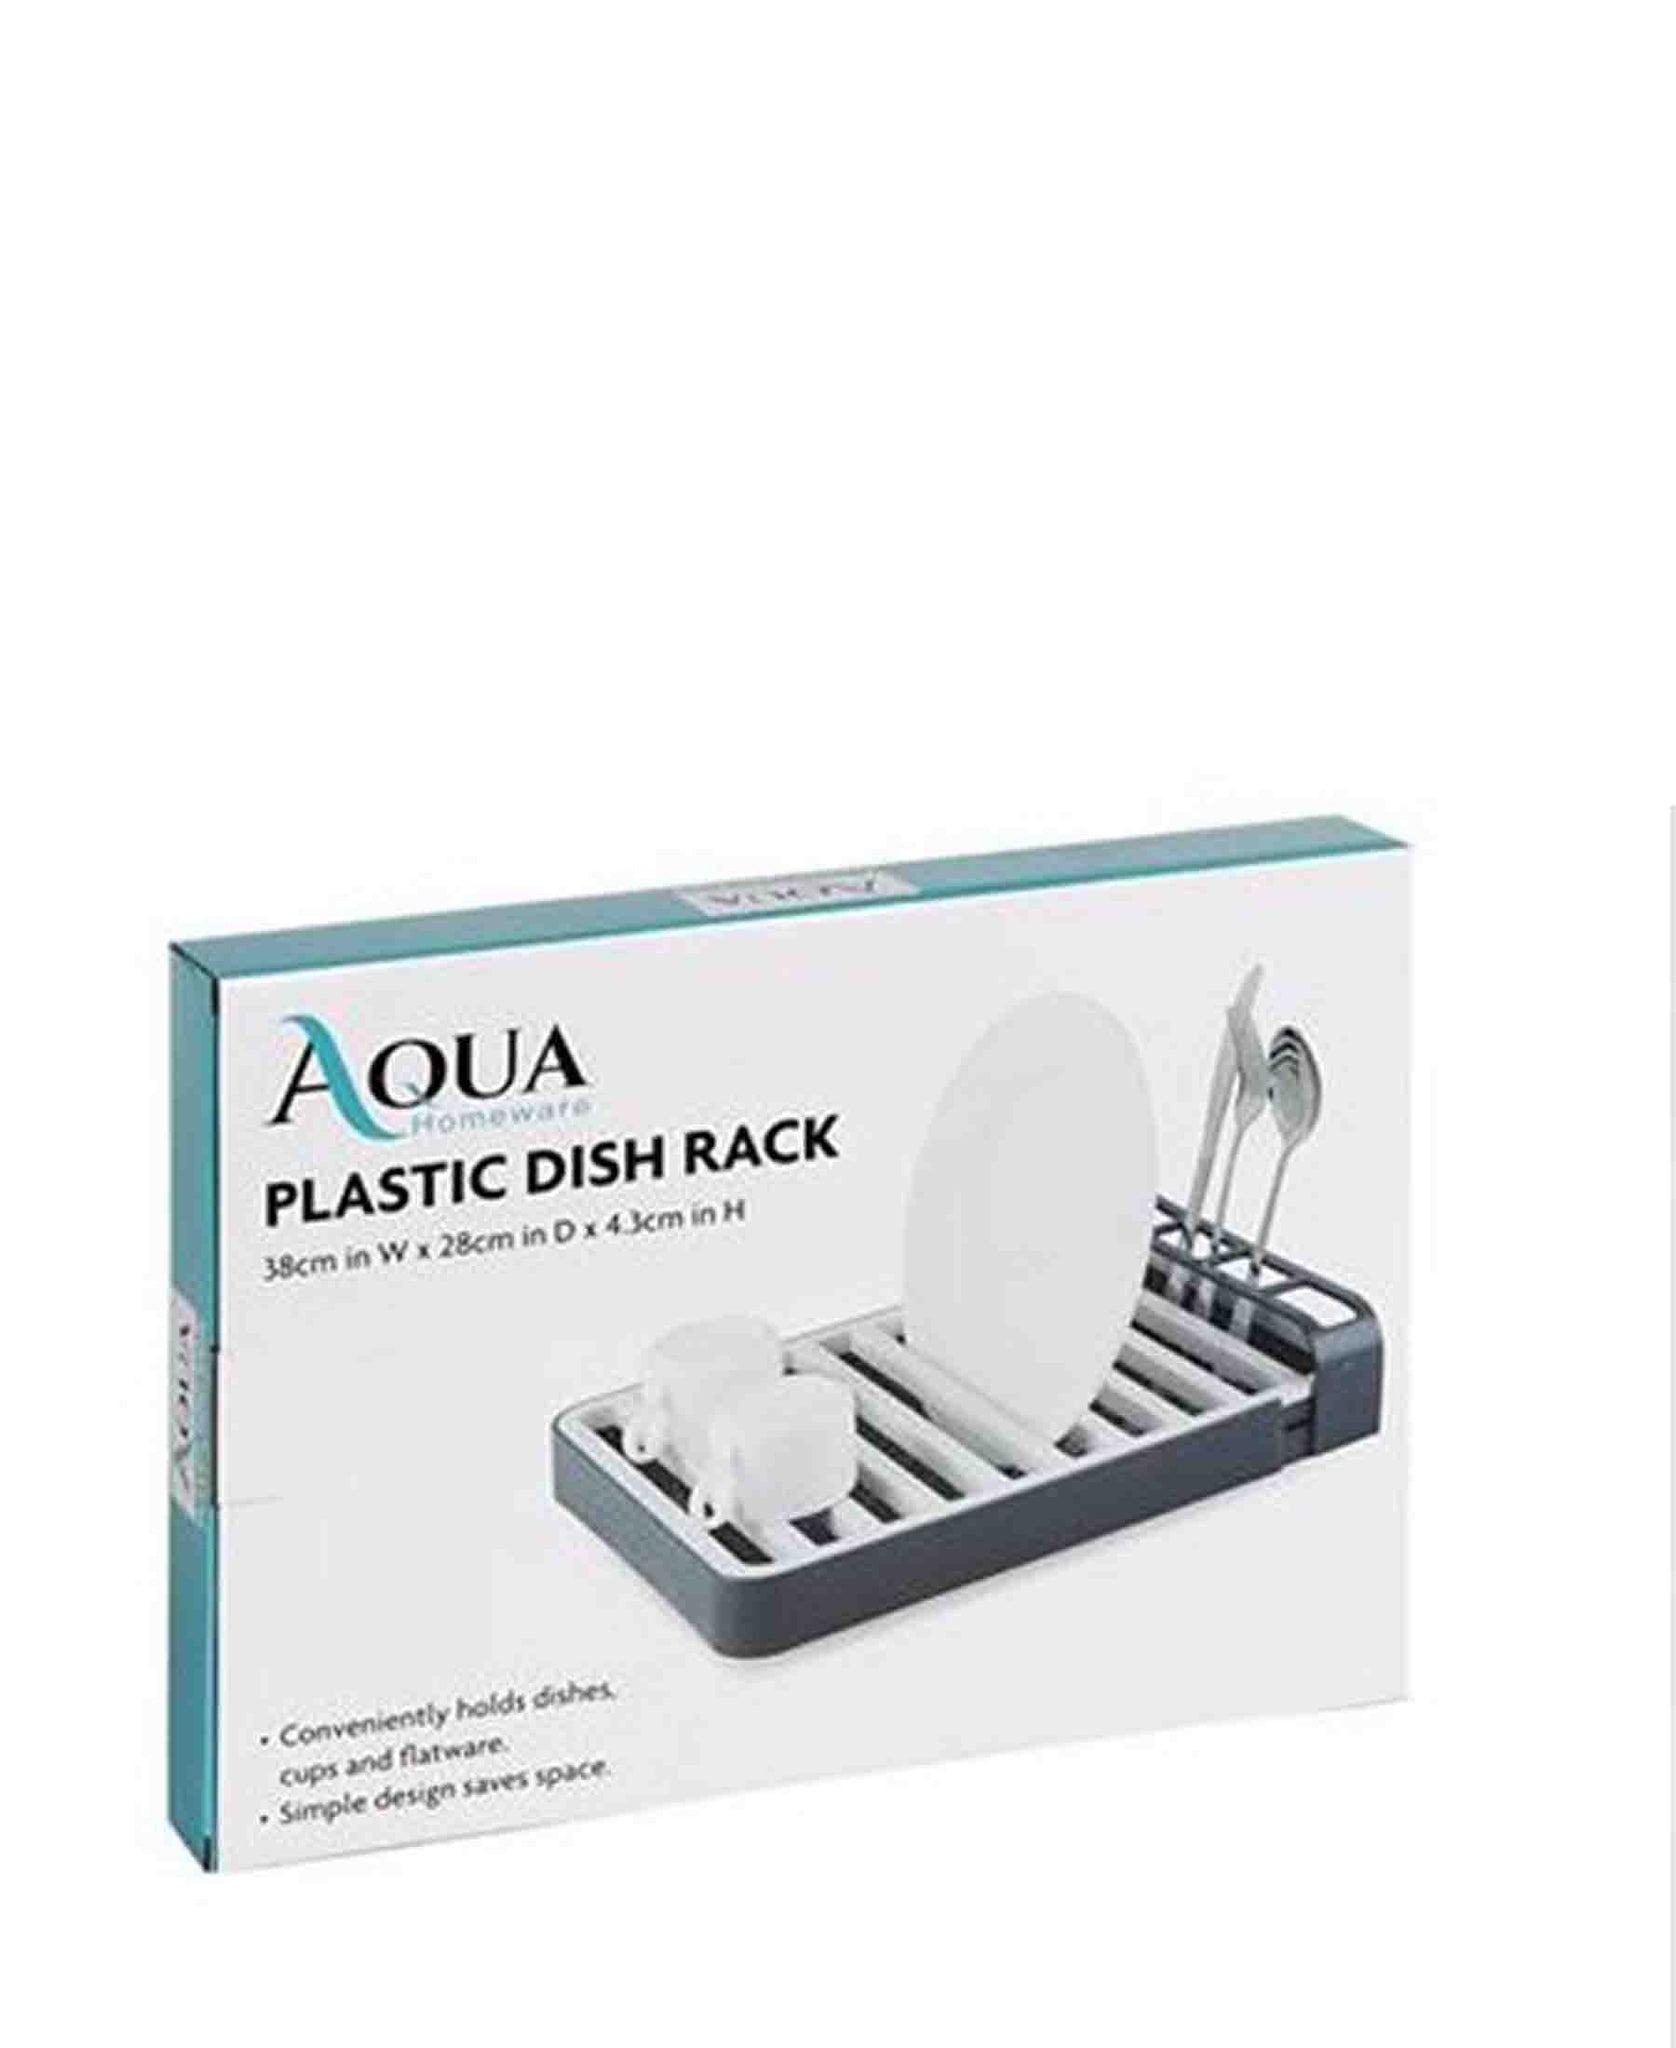 Aqua 38cm Compact Dish Rack - White & Black